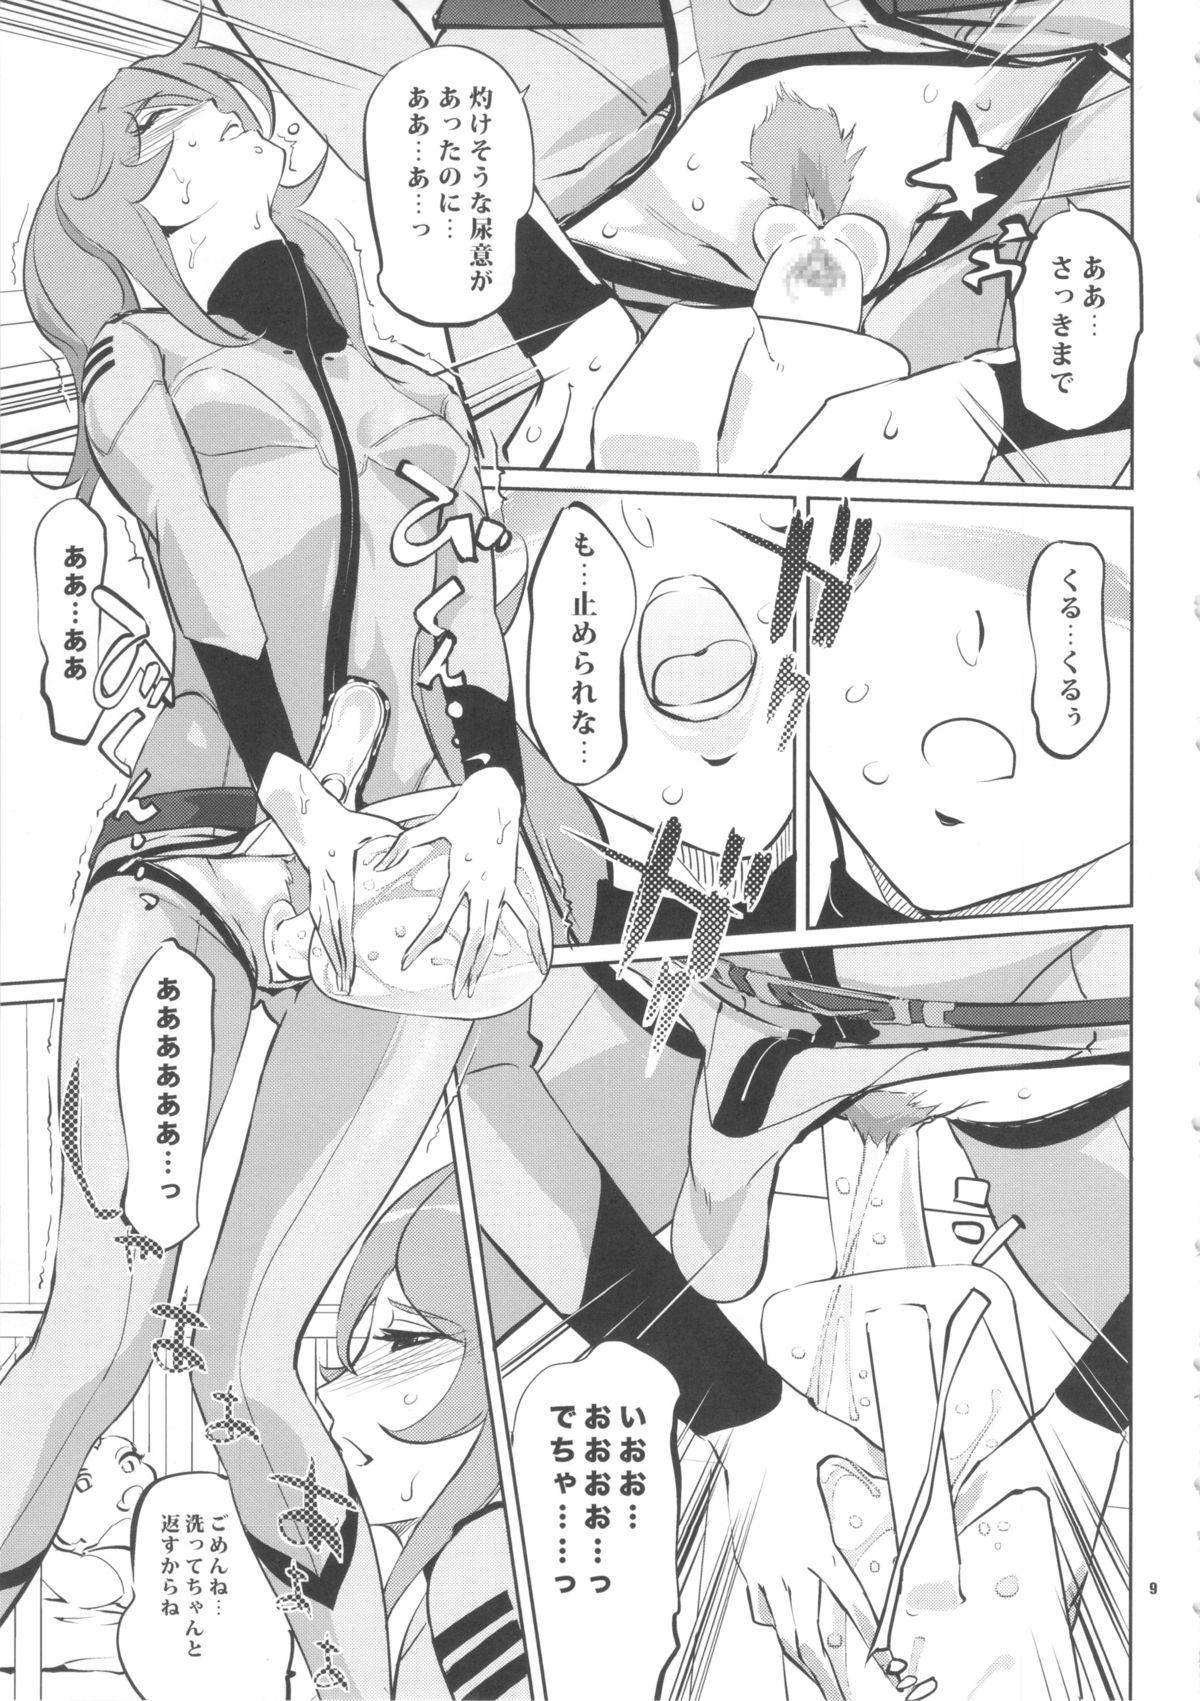 Riding YG-2199 - Space battleship yamato Dotado - Page 8